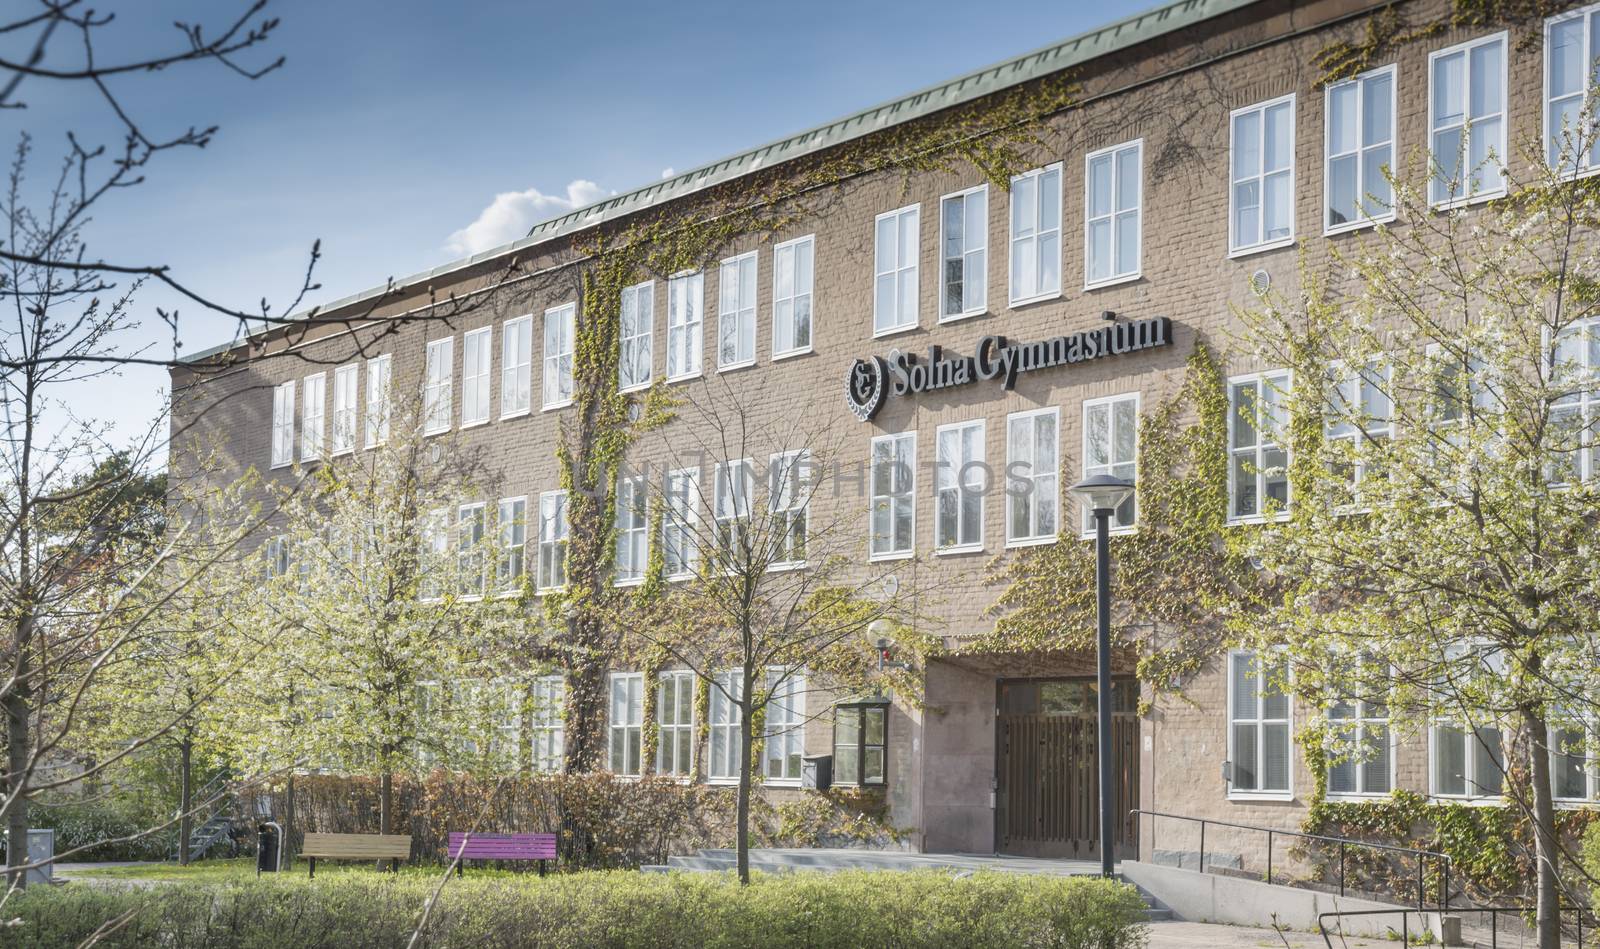 Exterior Solna Gymnasium highschool Sweden by ArtesiaWells